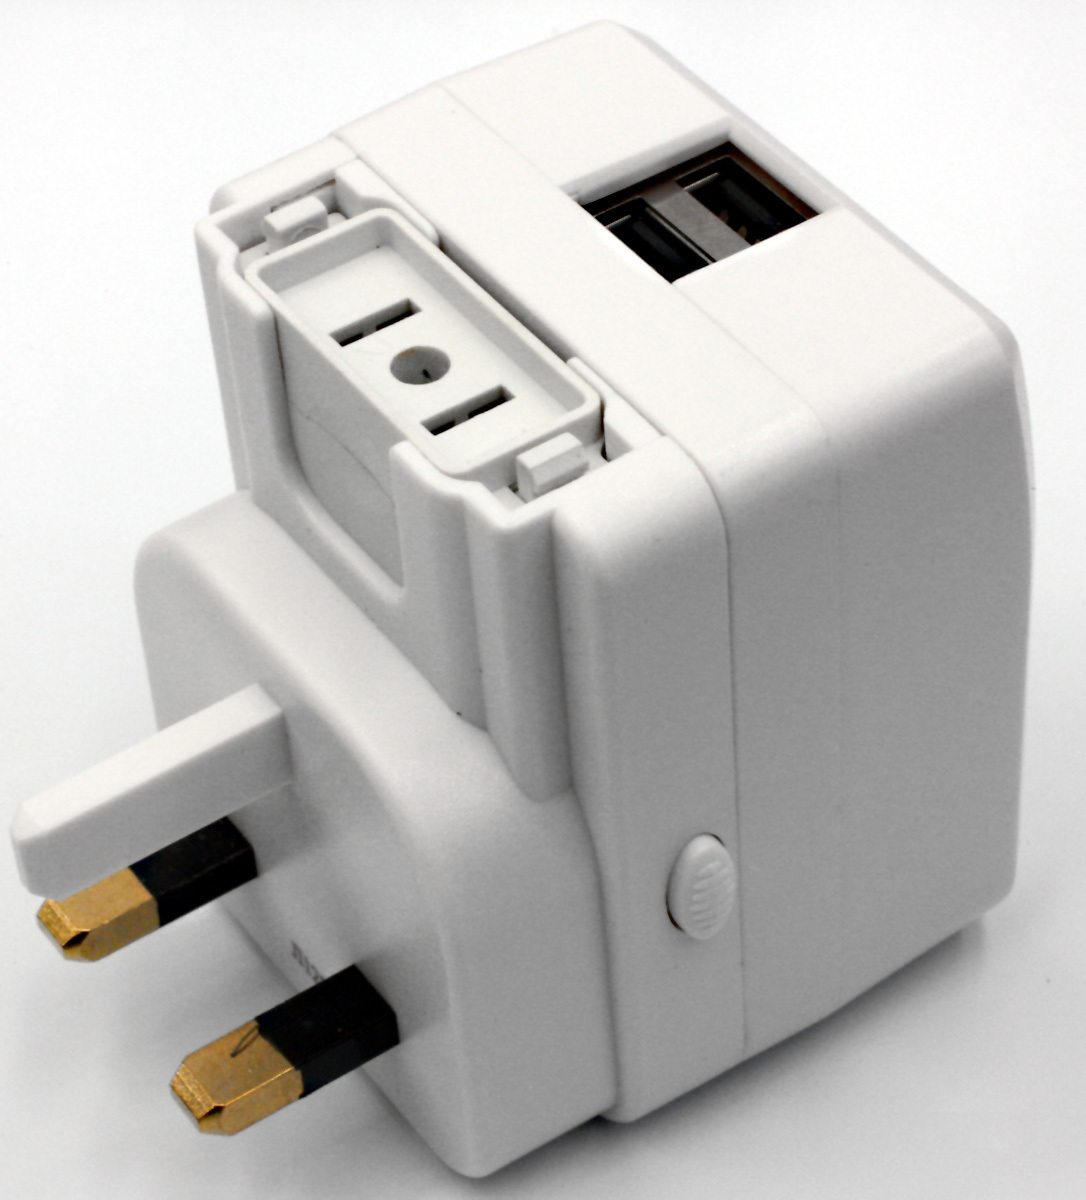 USB Travel Adaptor, Universal Adaptor - 2 ports